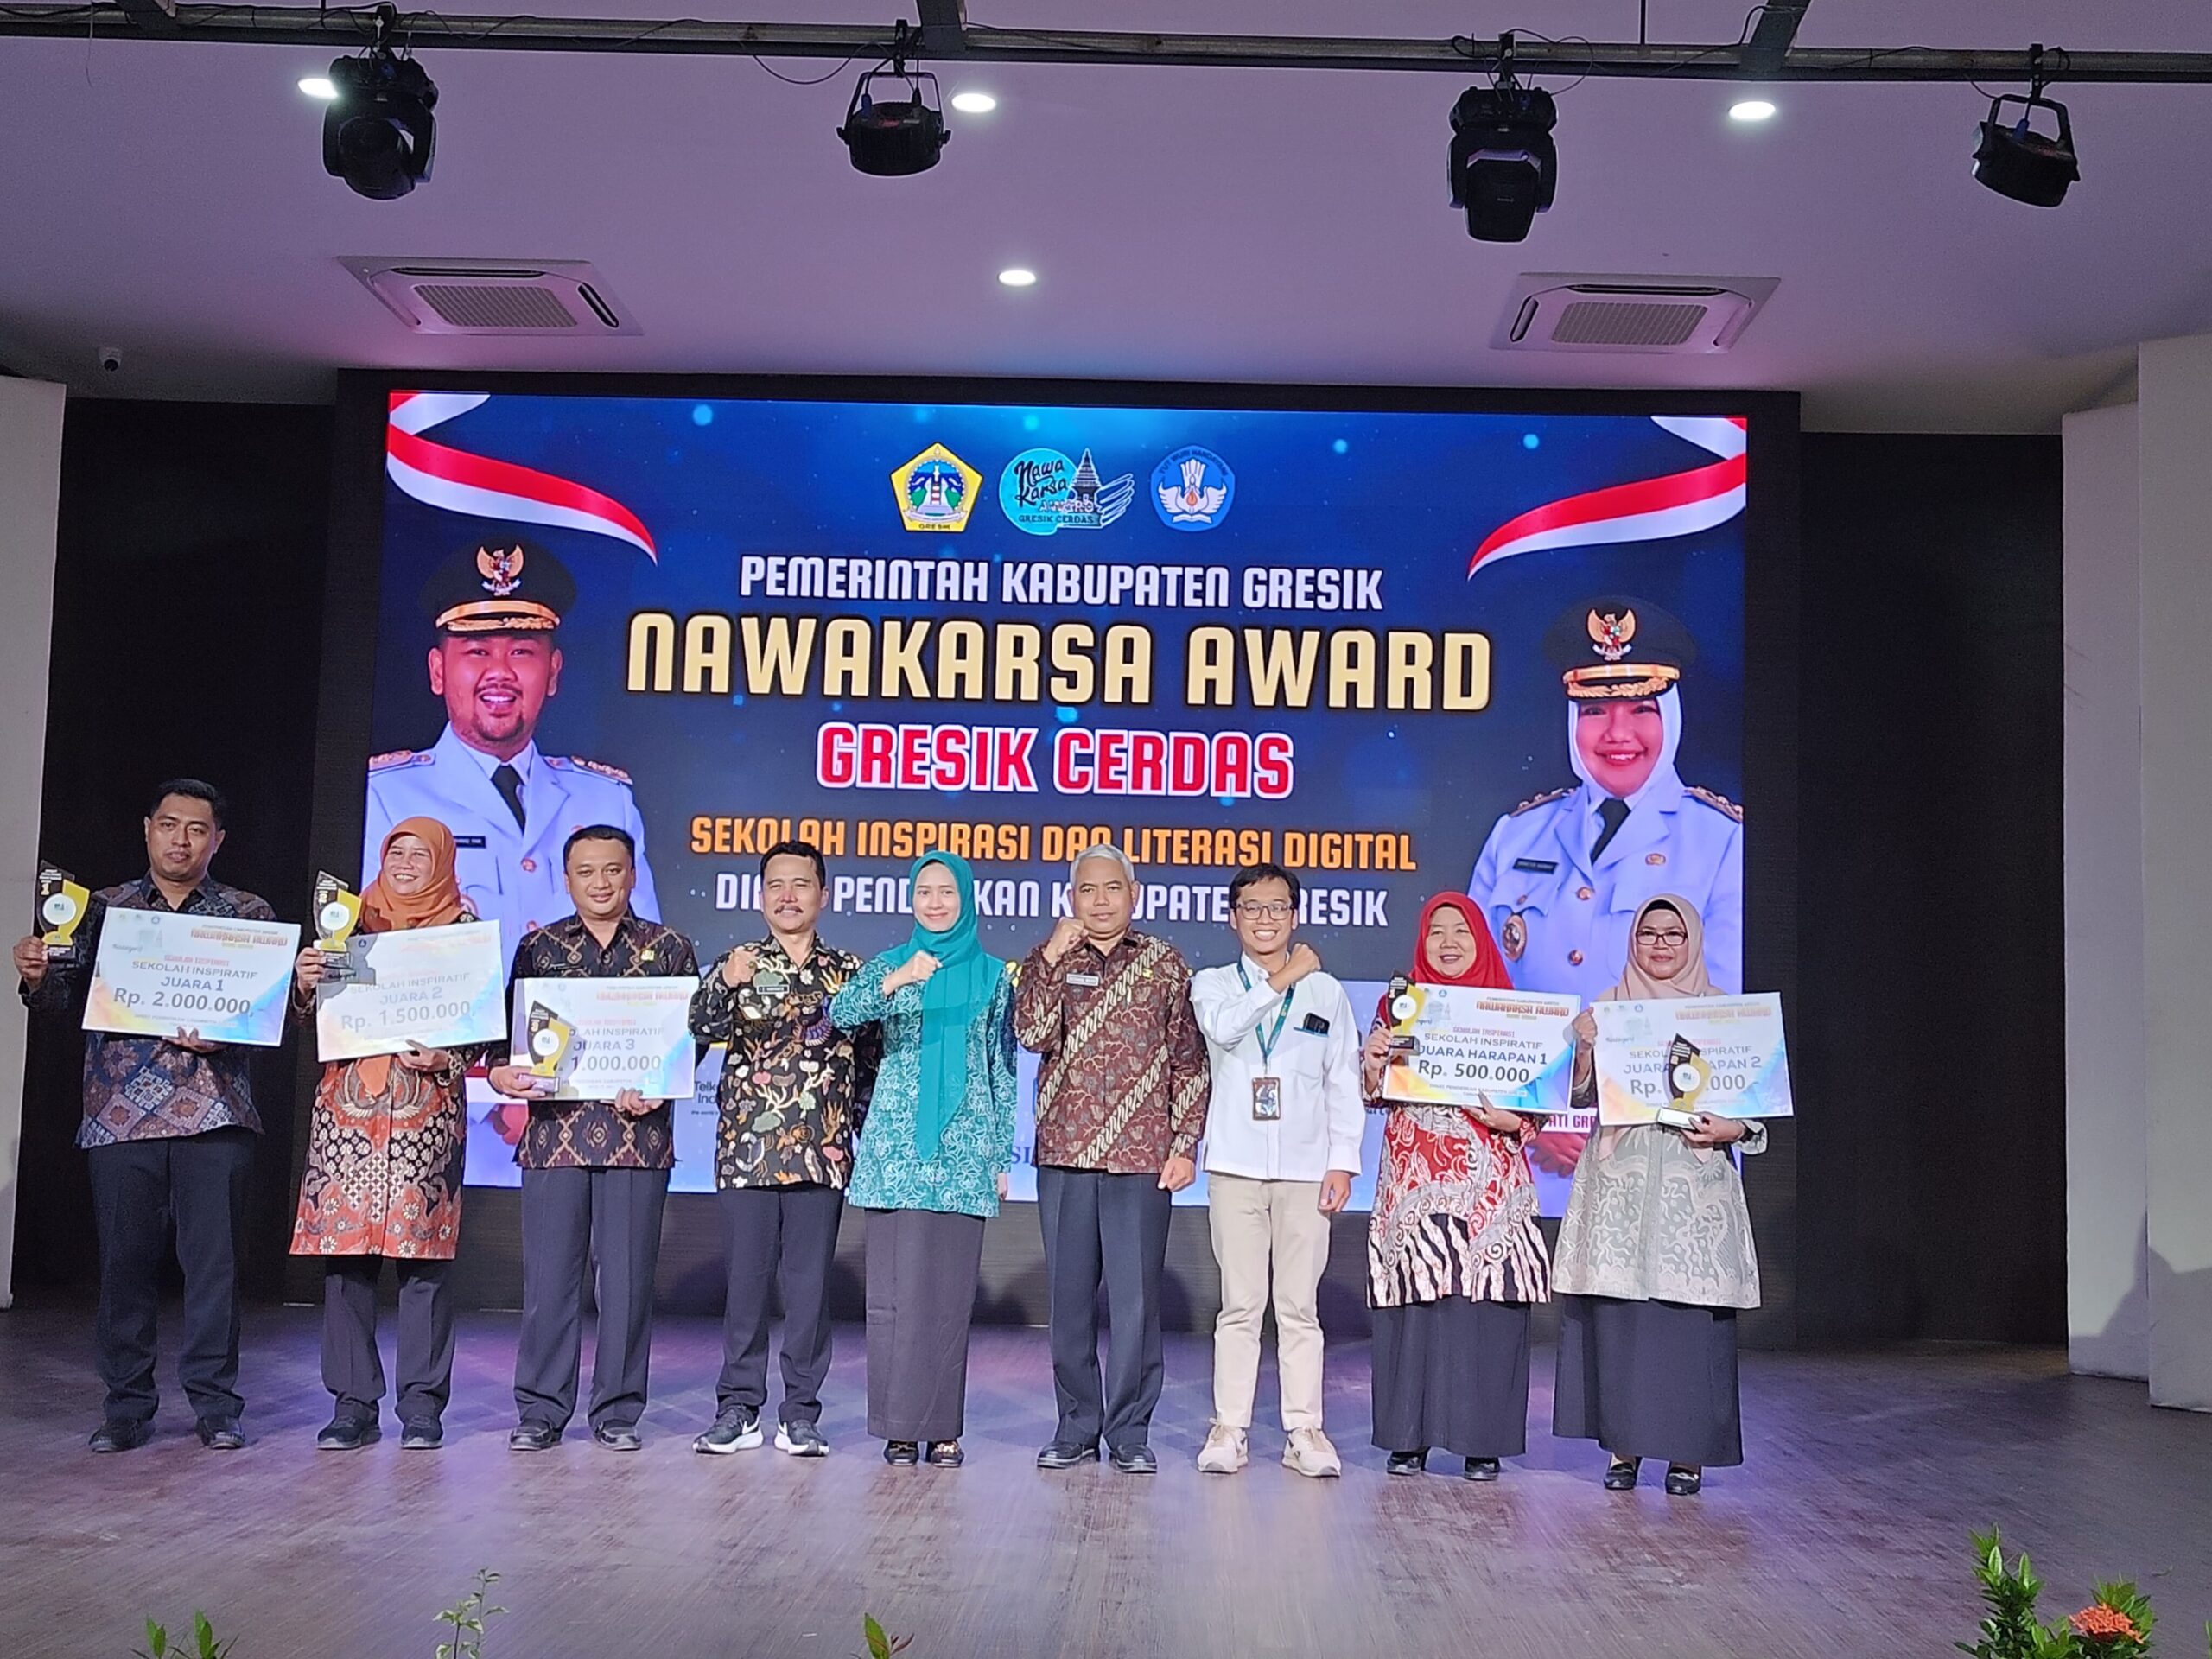 PLN Icon Plus Ikut Sukseskan Acara Nawakarsa Award Gresik Cerdas Bersama Dinas Pendidikan Kabupaten Gresik